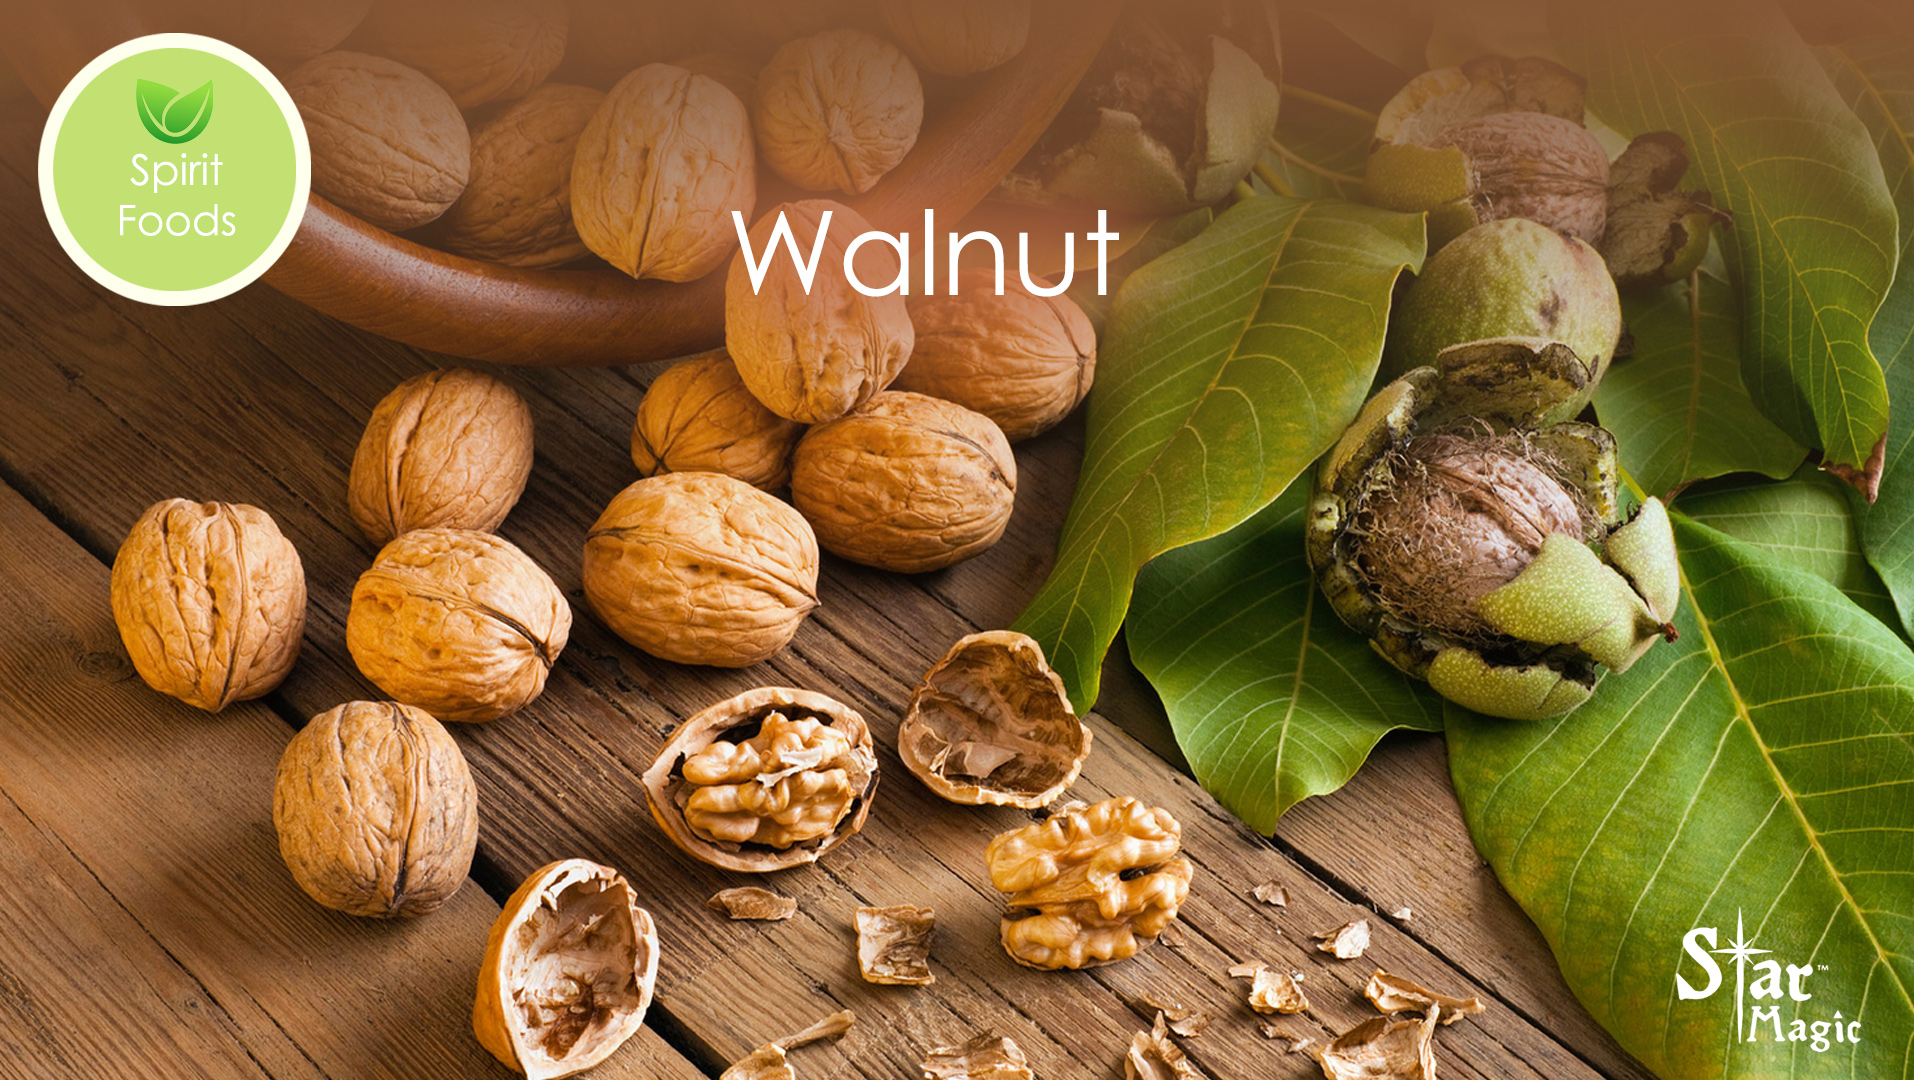 Spirit Food – Walnut